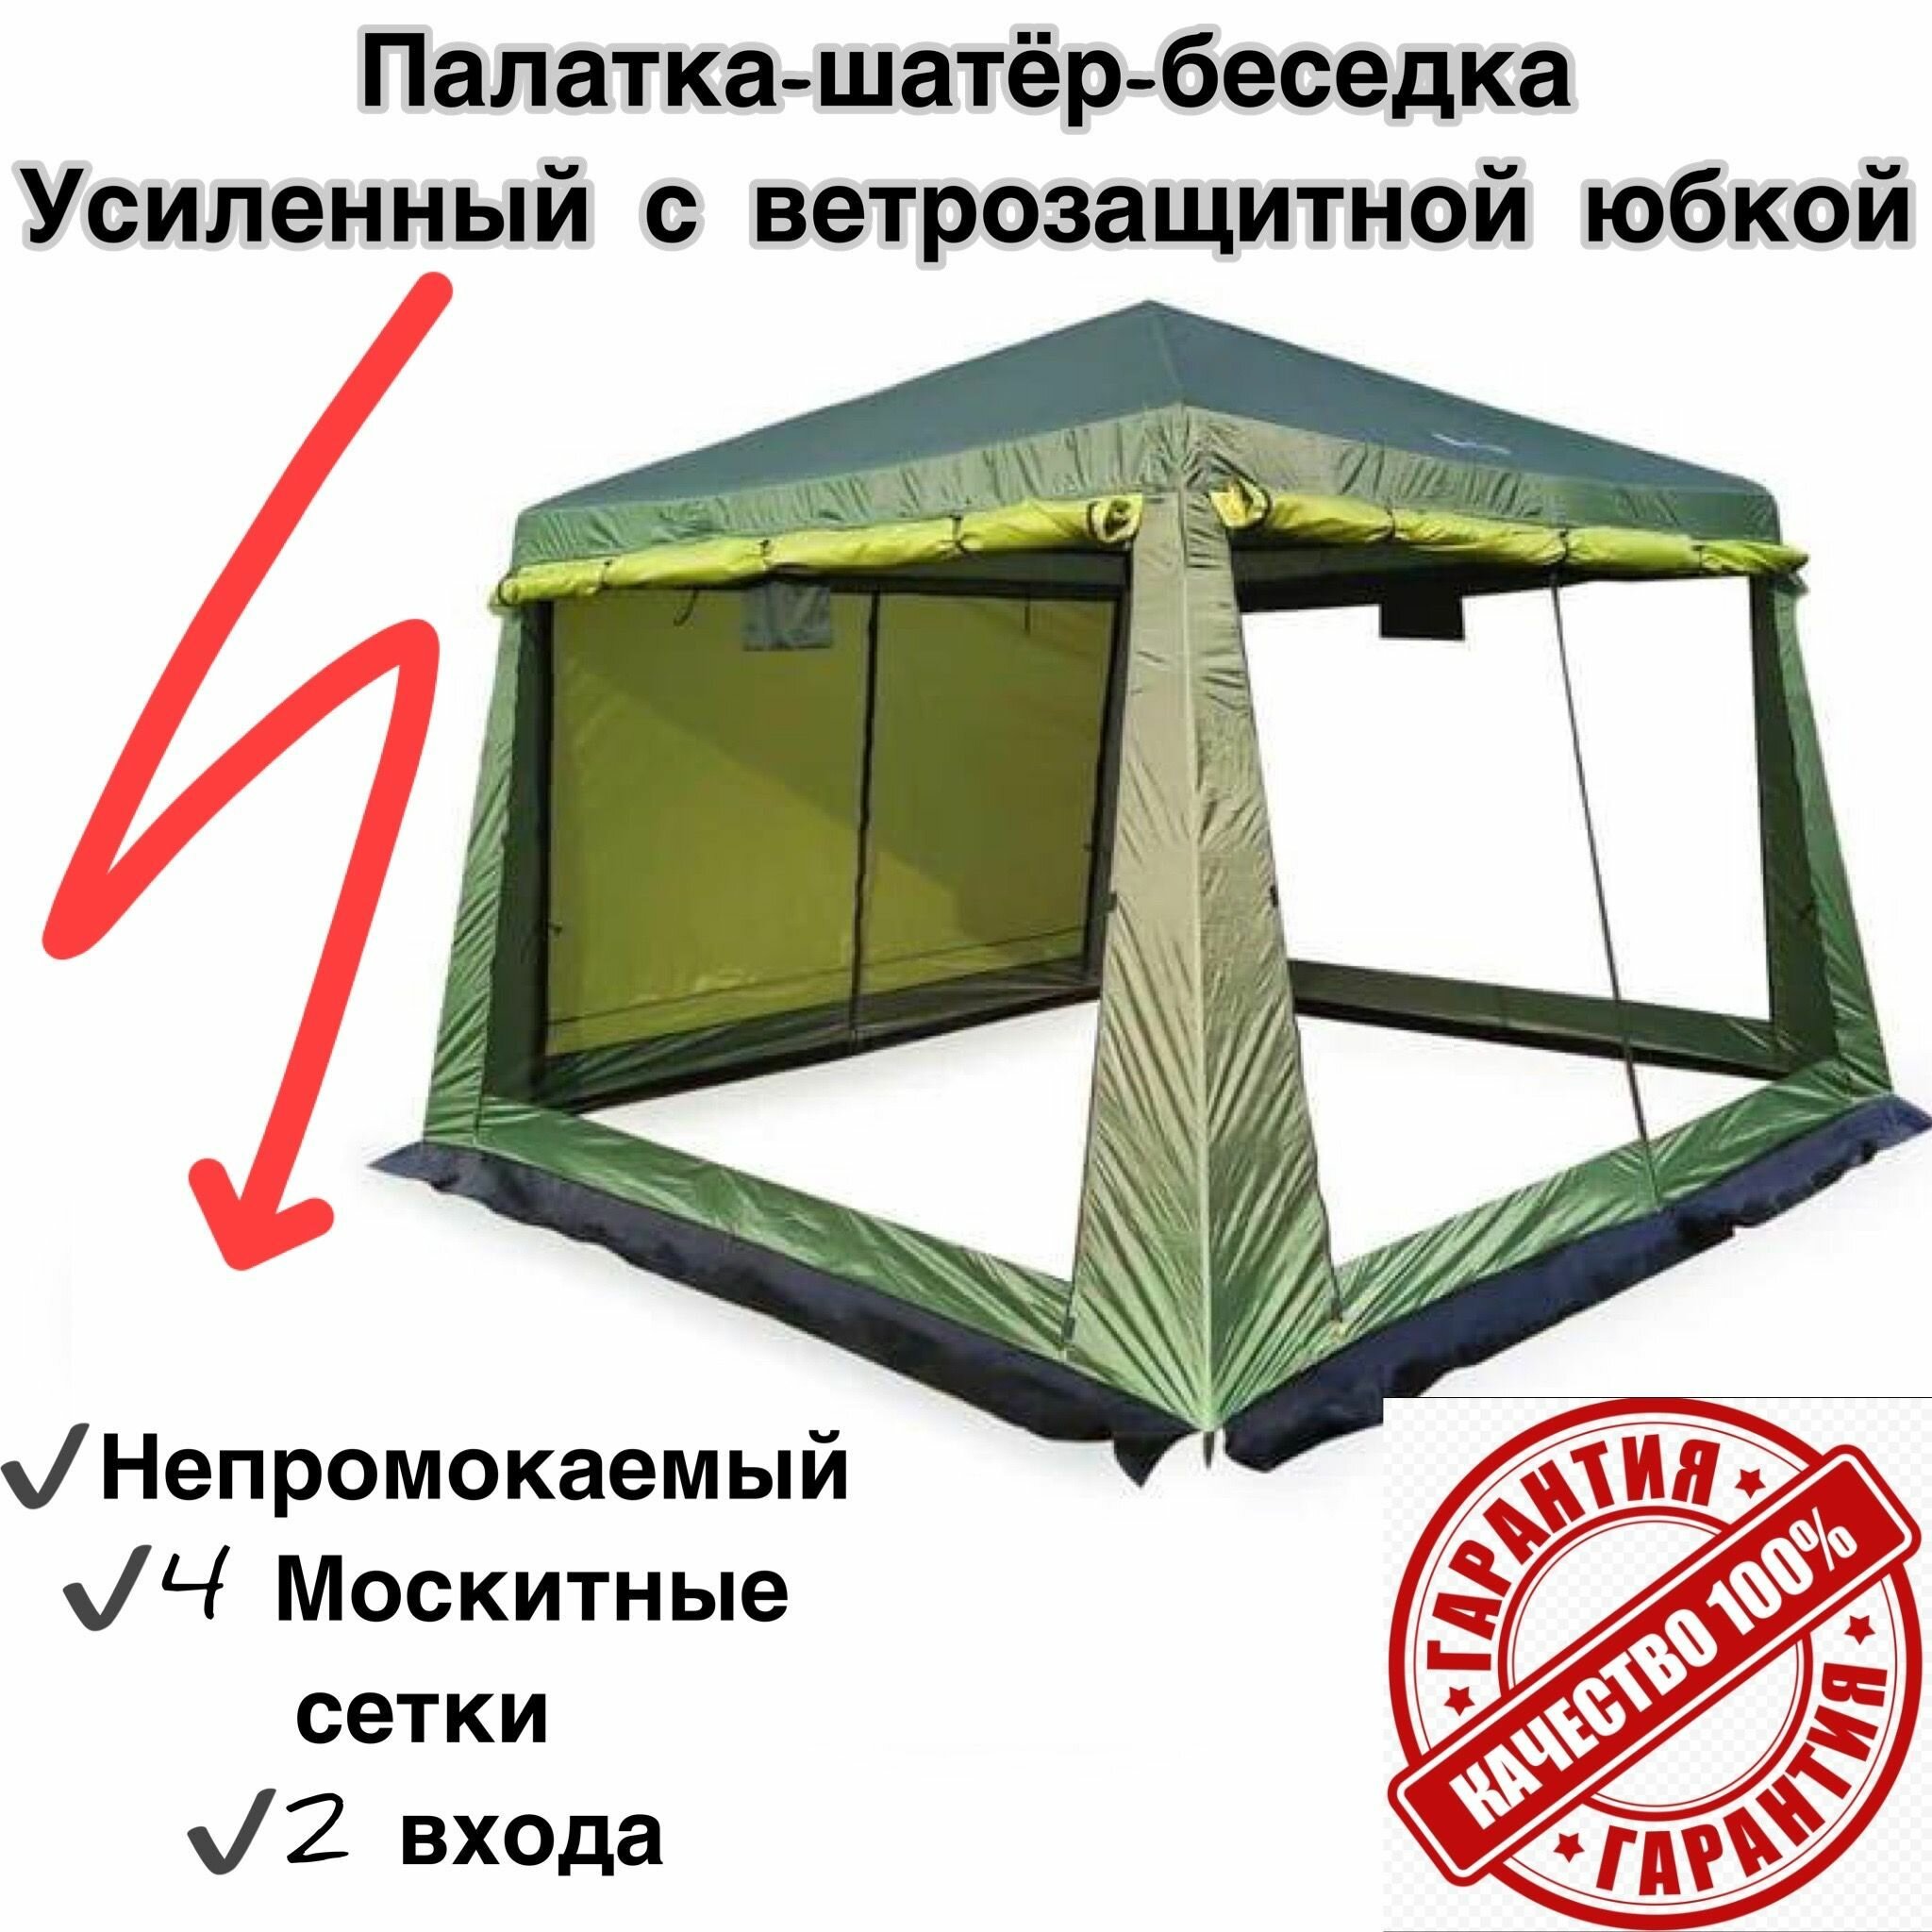 Палатка-шатер-кухня-тент ветрозащитная юбка усиленный каркас легенда LANYU 1628D